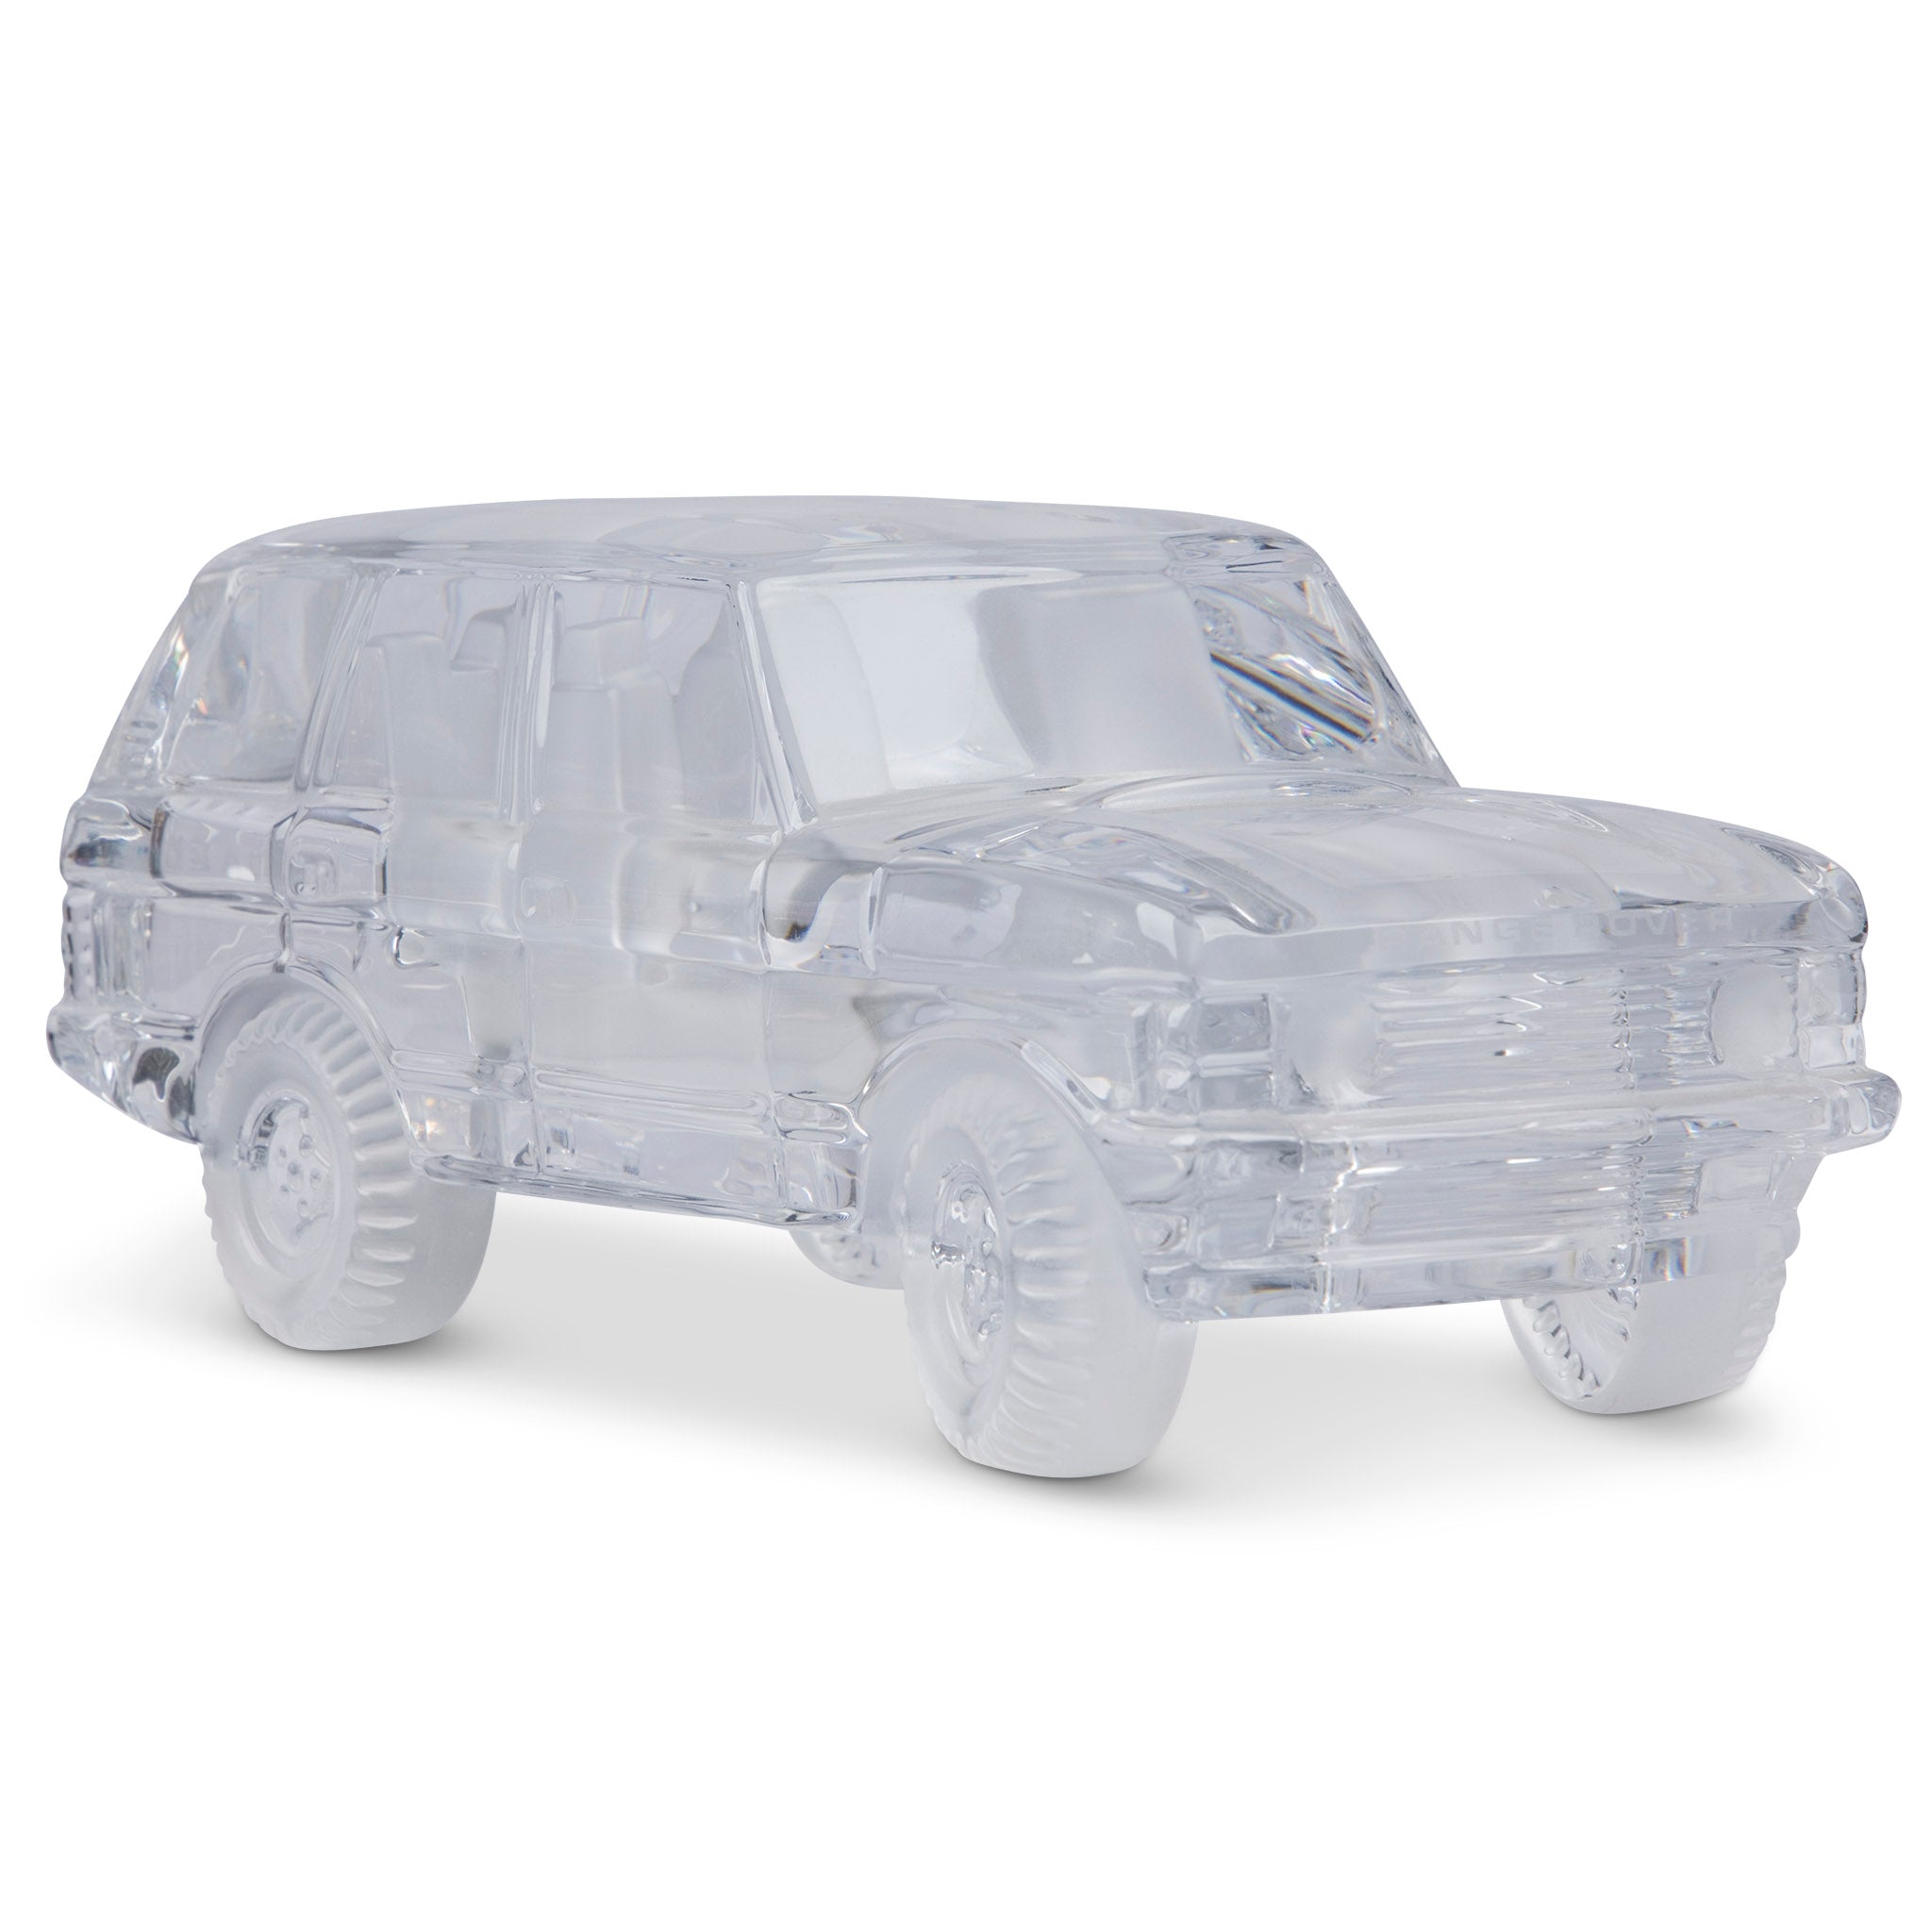 Daum Crystal Range Rover Model